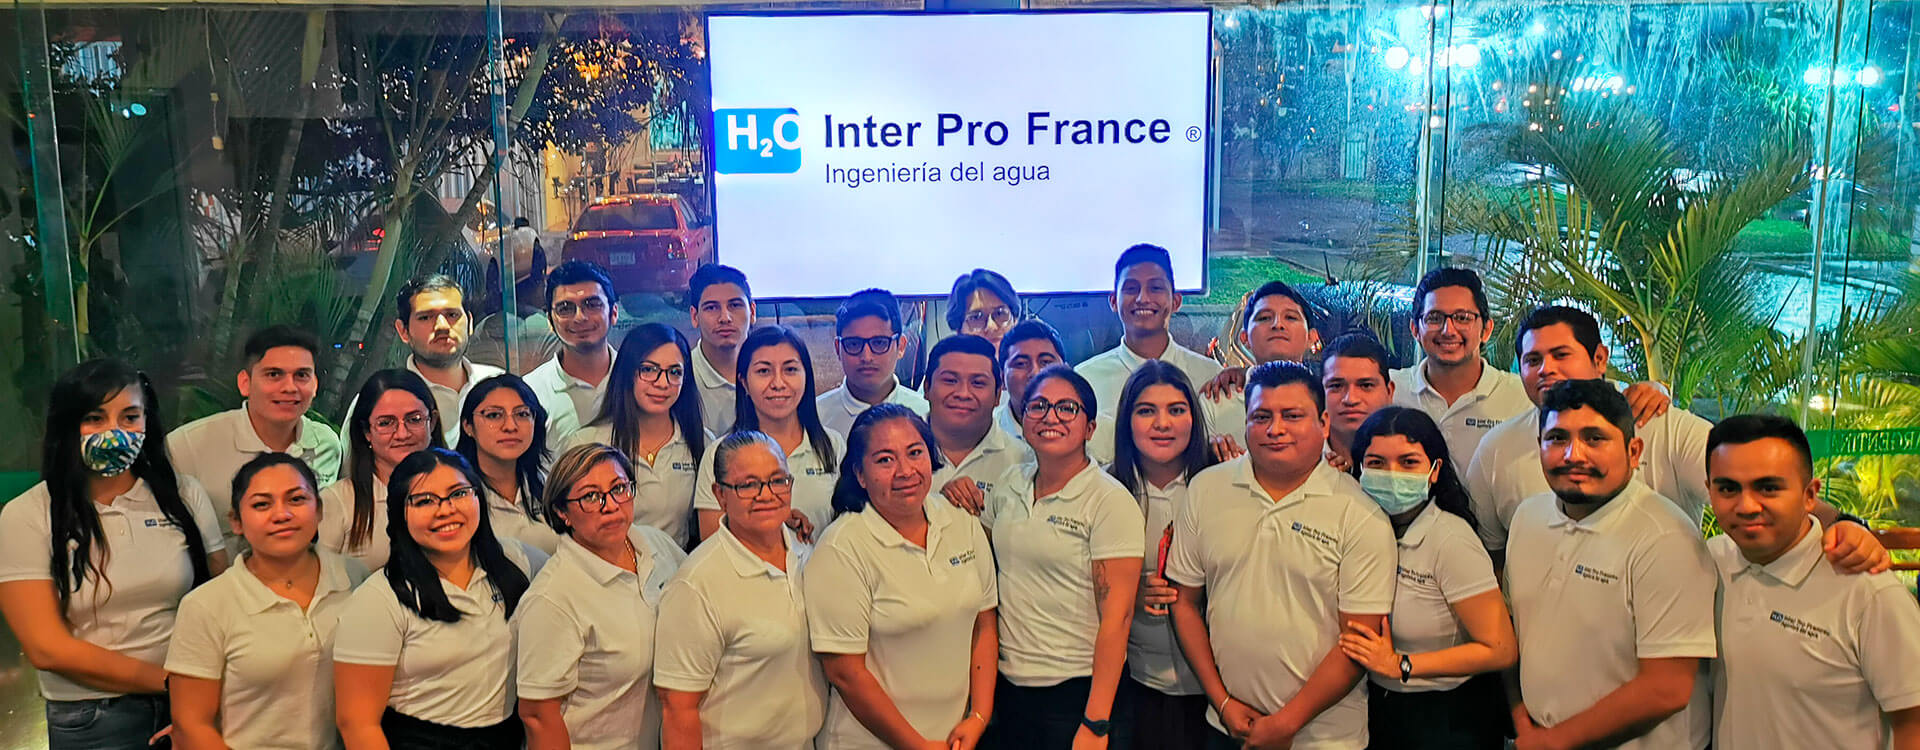 H2O Inter Pro France